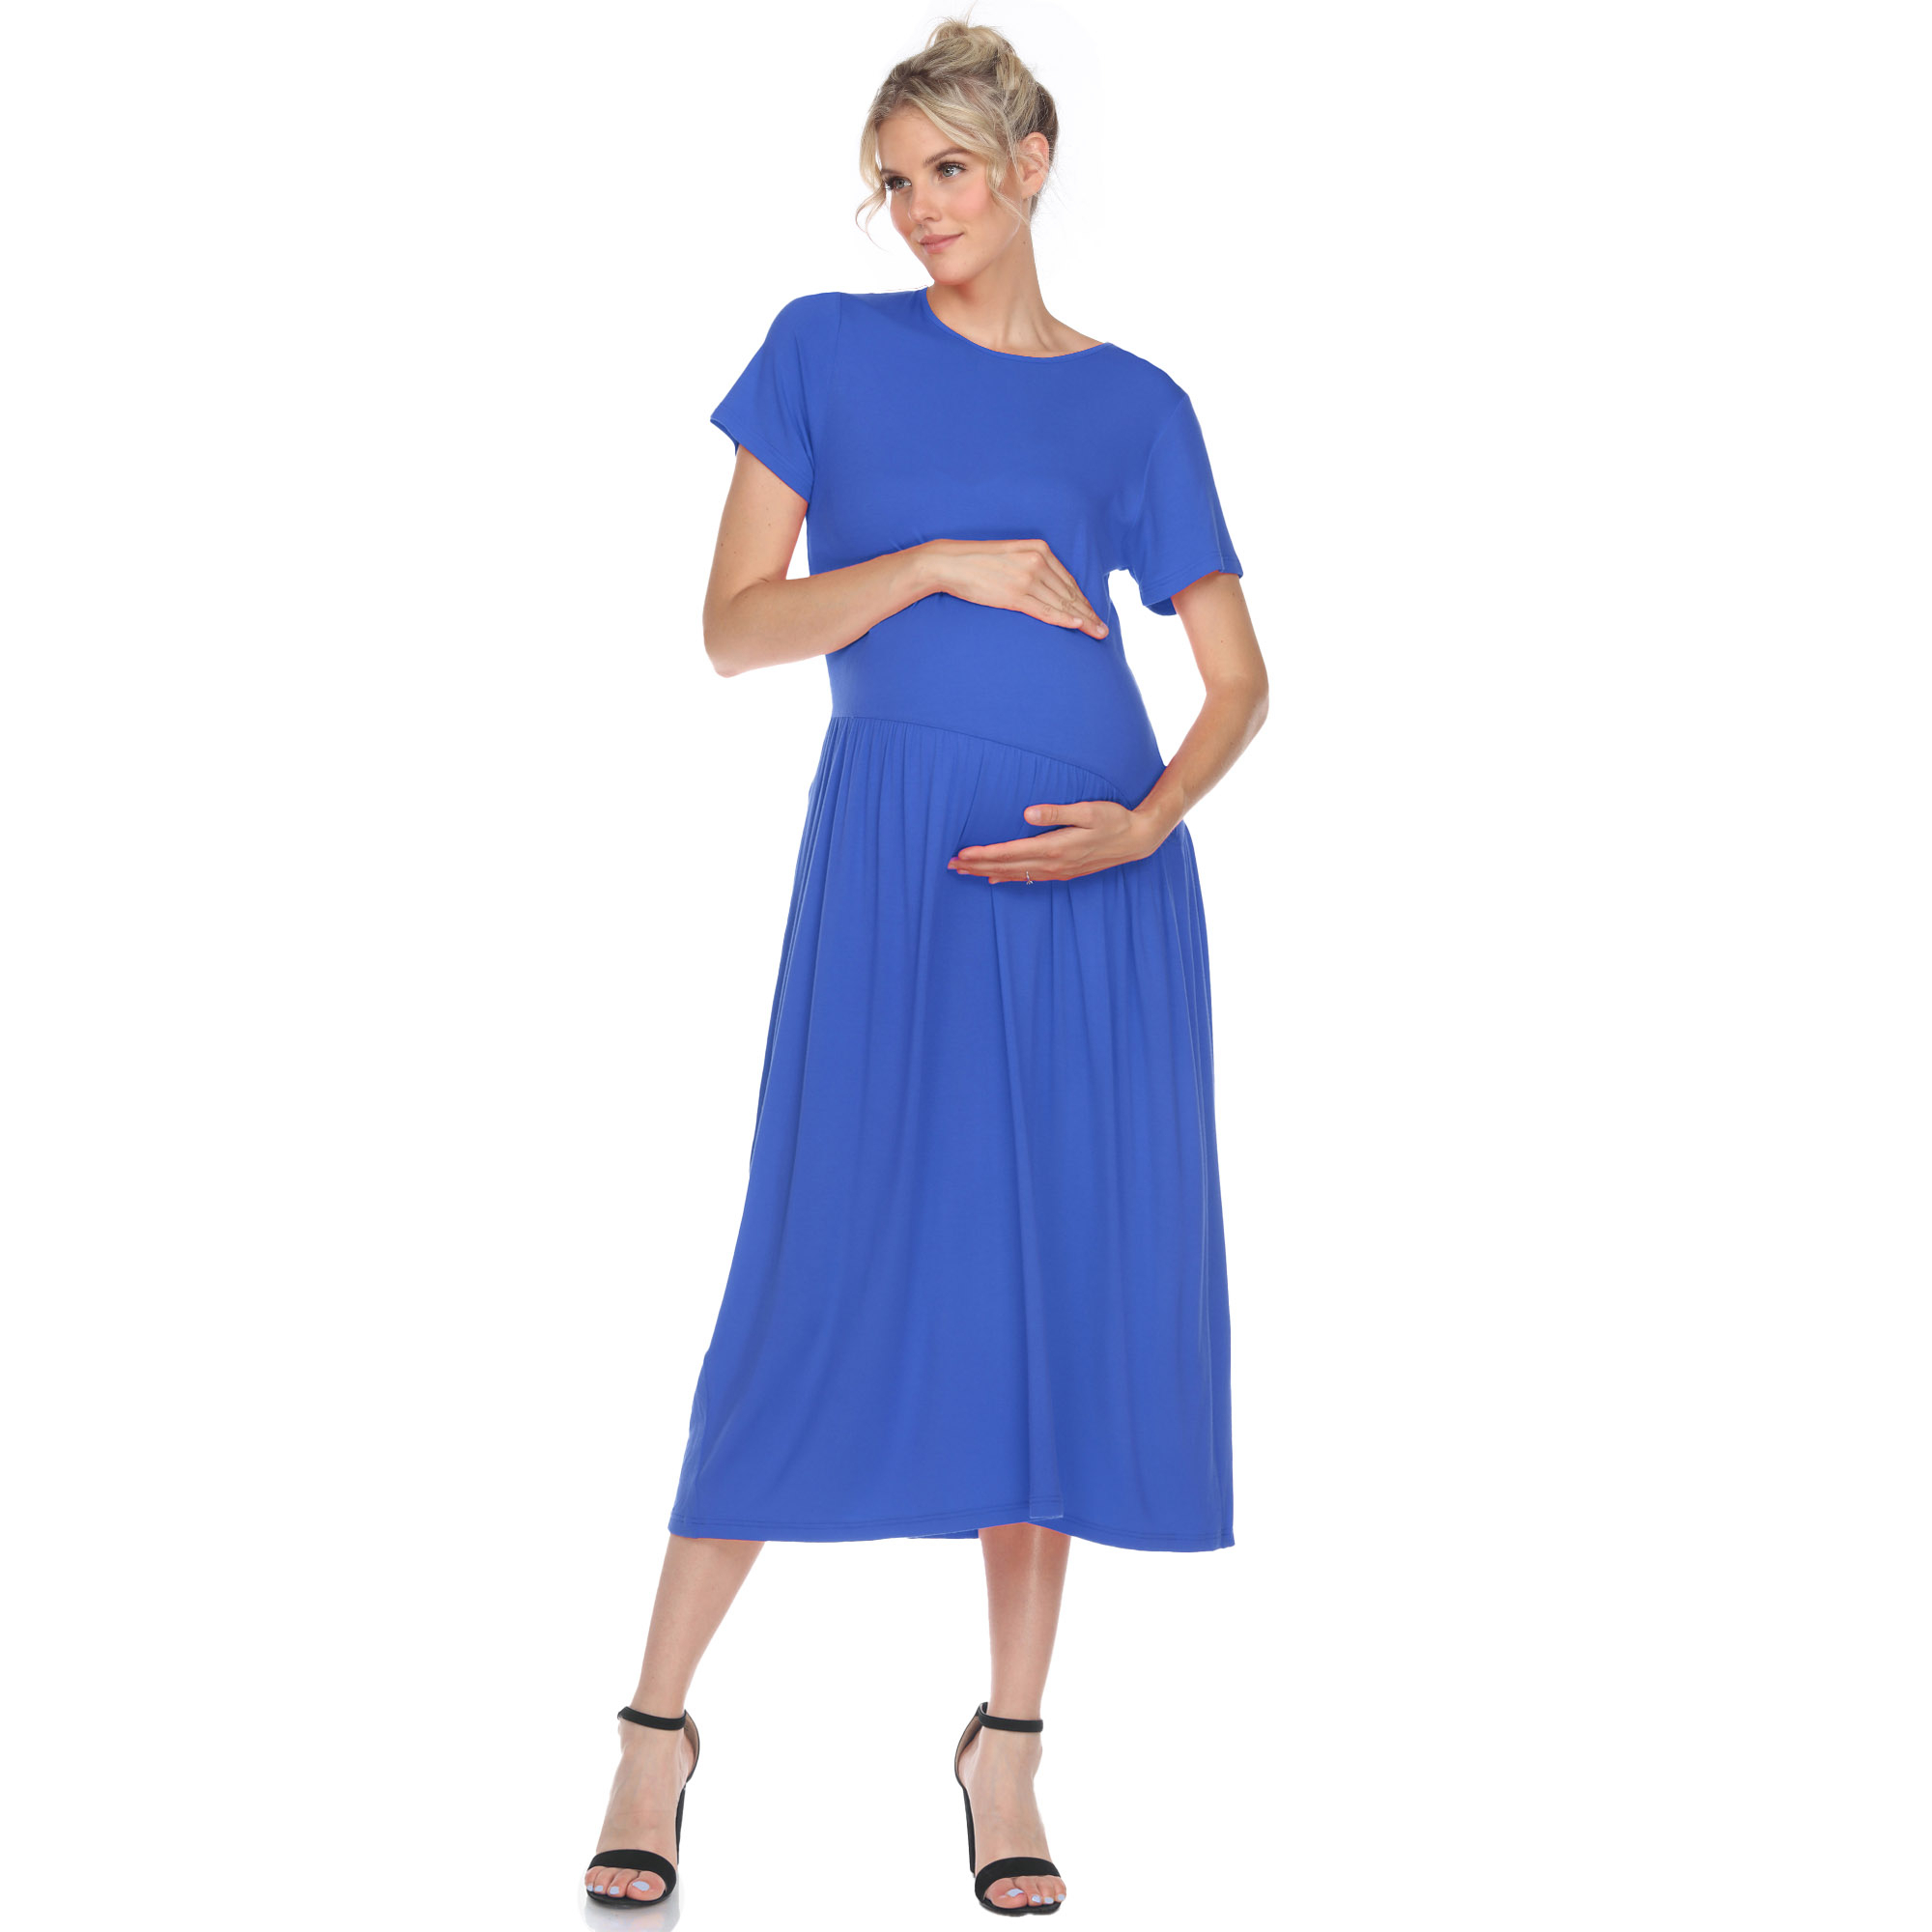 White Mark Womenâs Maternity Short Sleeve Maxi Dress - Royal, 2X